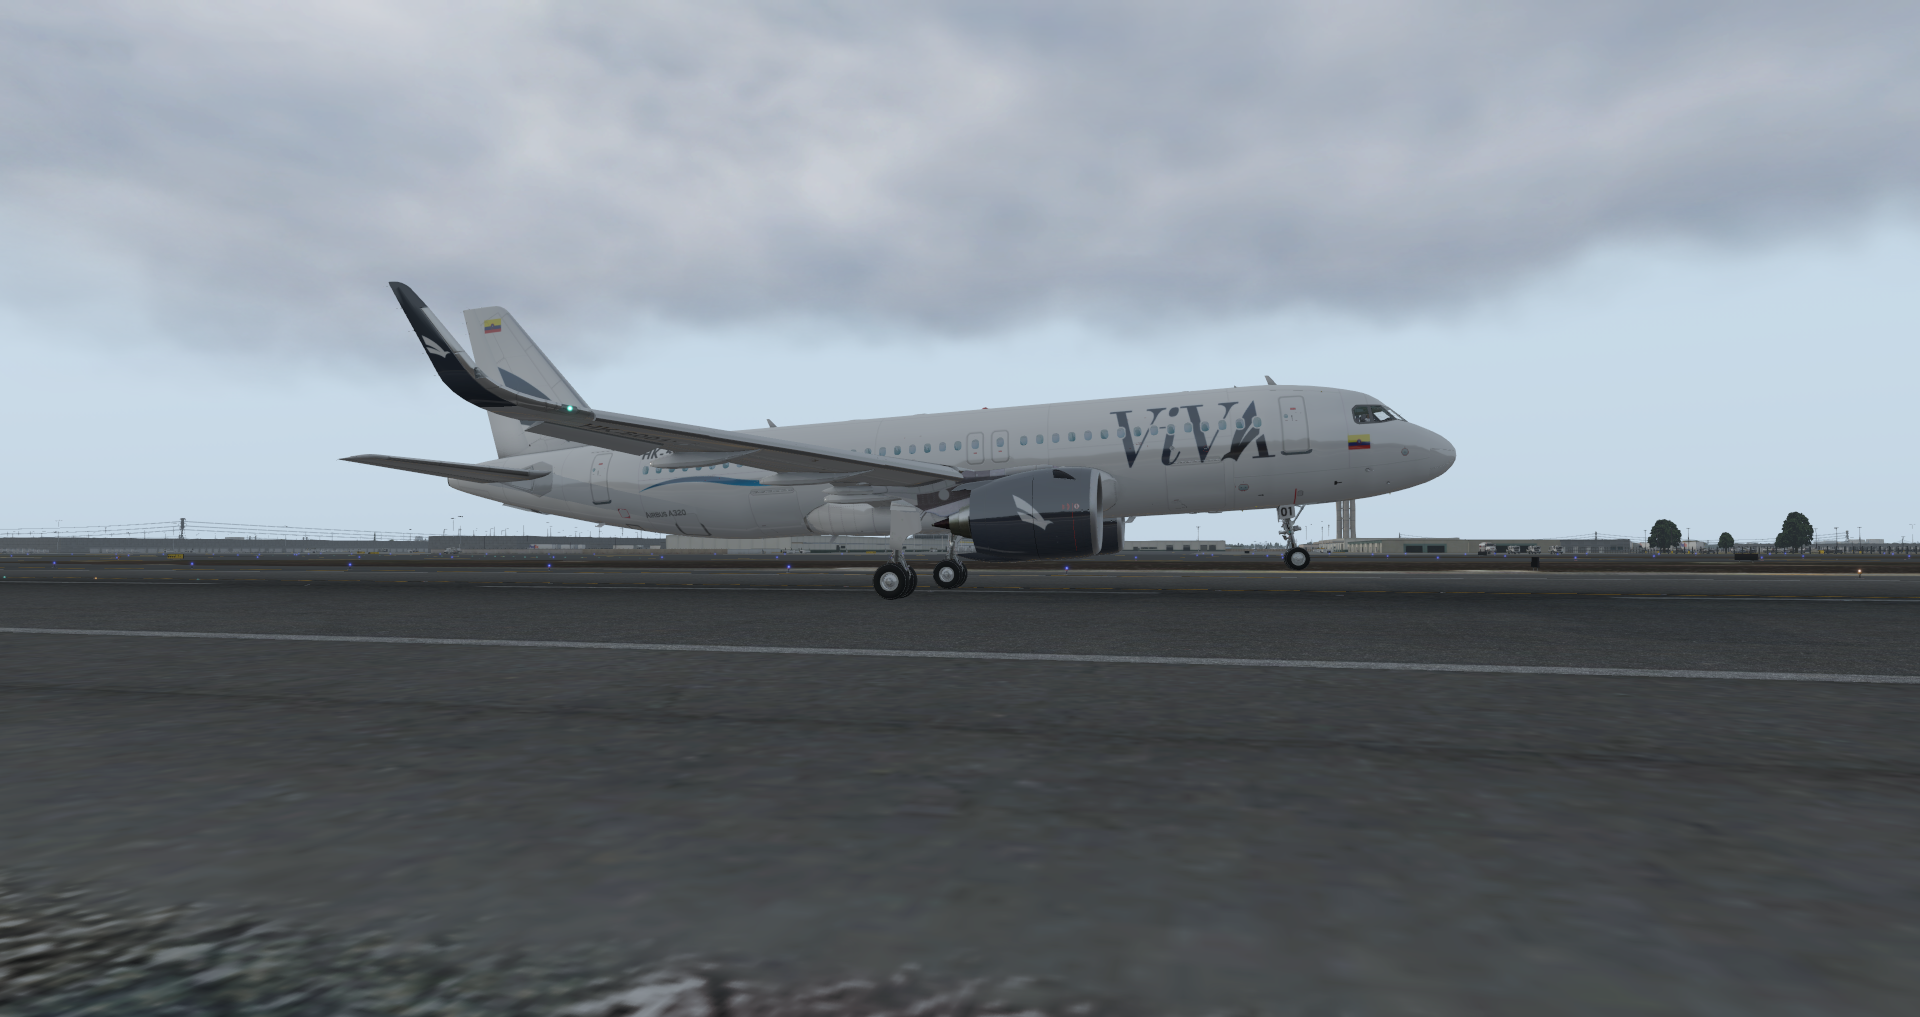 Viva Virtual Airlines